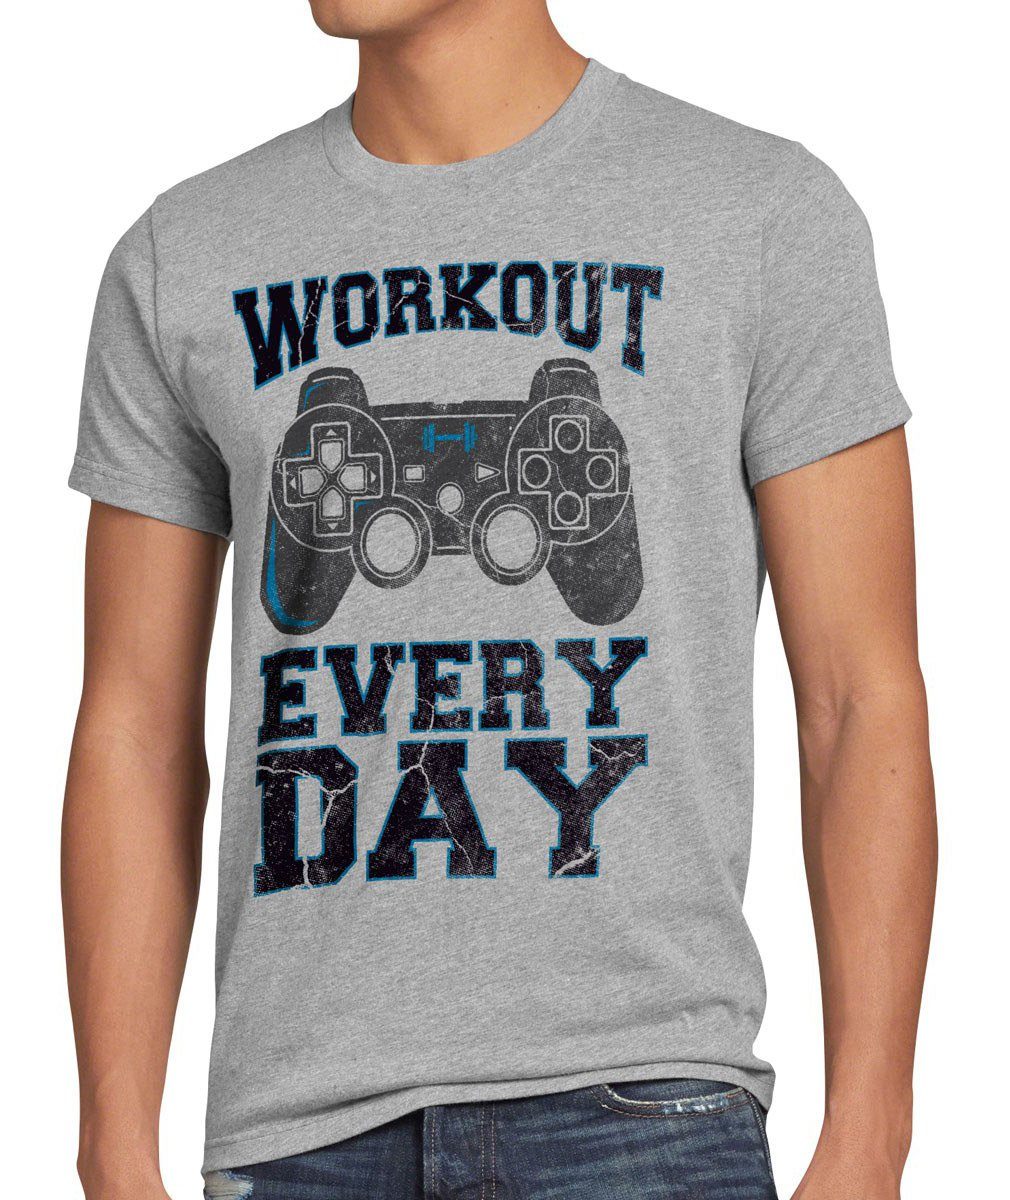 style3 Print-Shirt Herren T-Shirt Workout Gamer play sport station kontroller konsole gym game fun grau meliert | T-Shirts